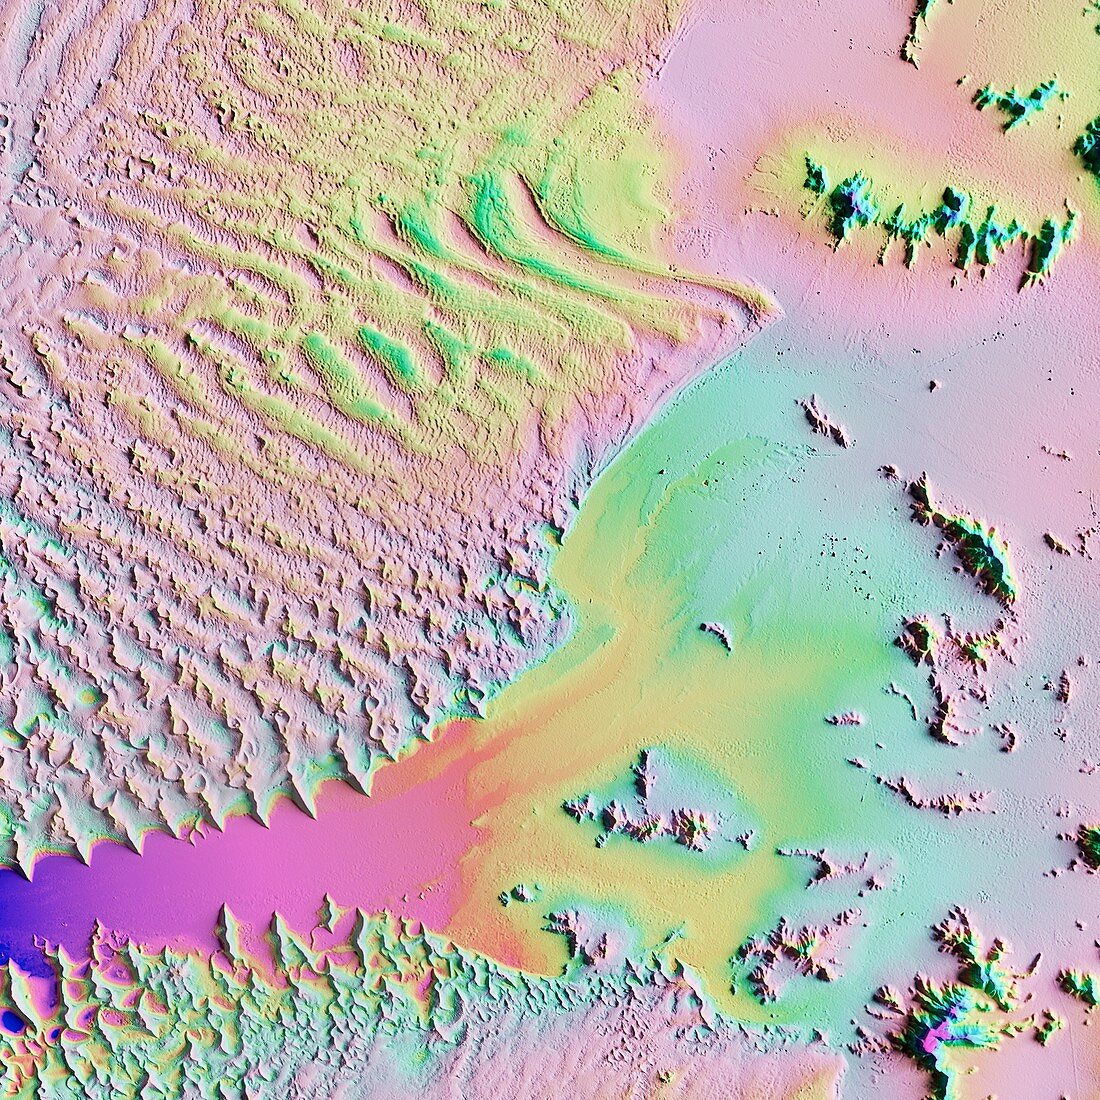 Sand dunes in the Namib Desert, LiDAR satellite image